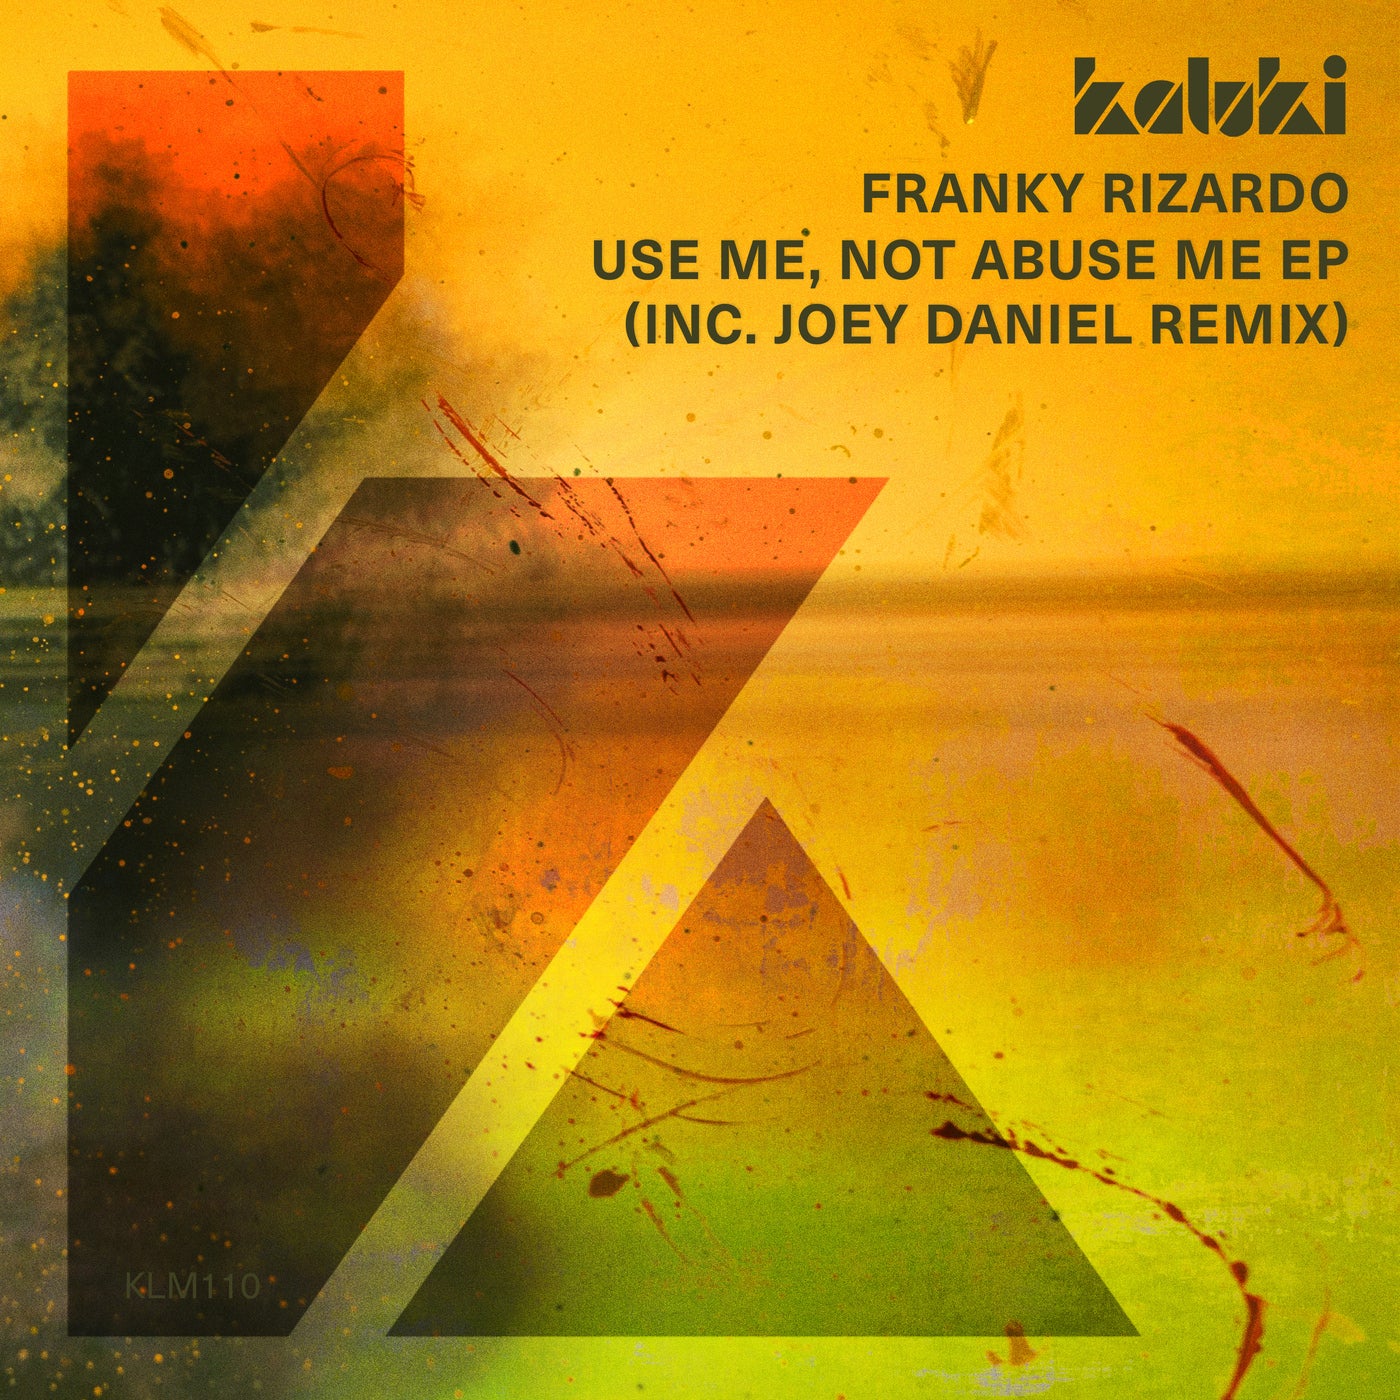 Franky Rizardo – Use Me, Not Abuse Me EP [KLM11001Z]